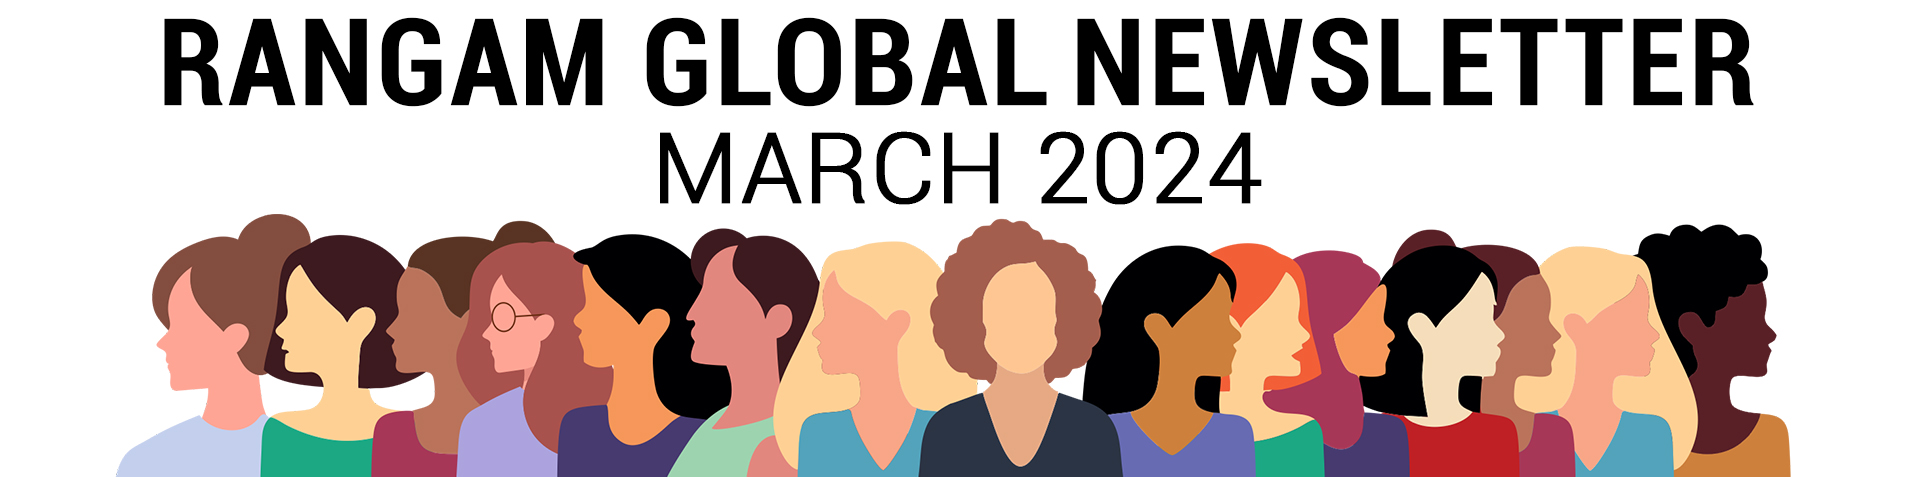 Rangam global newsletter march 2024